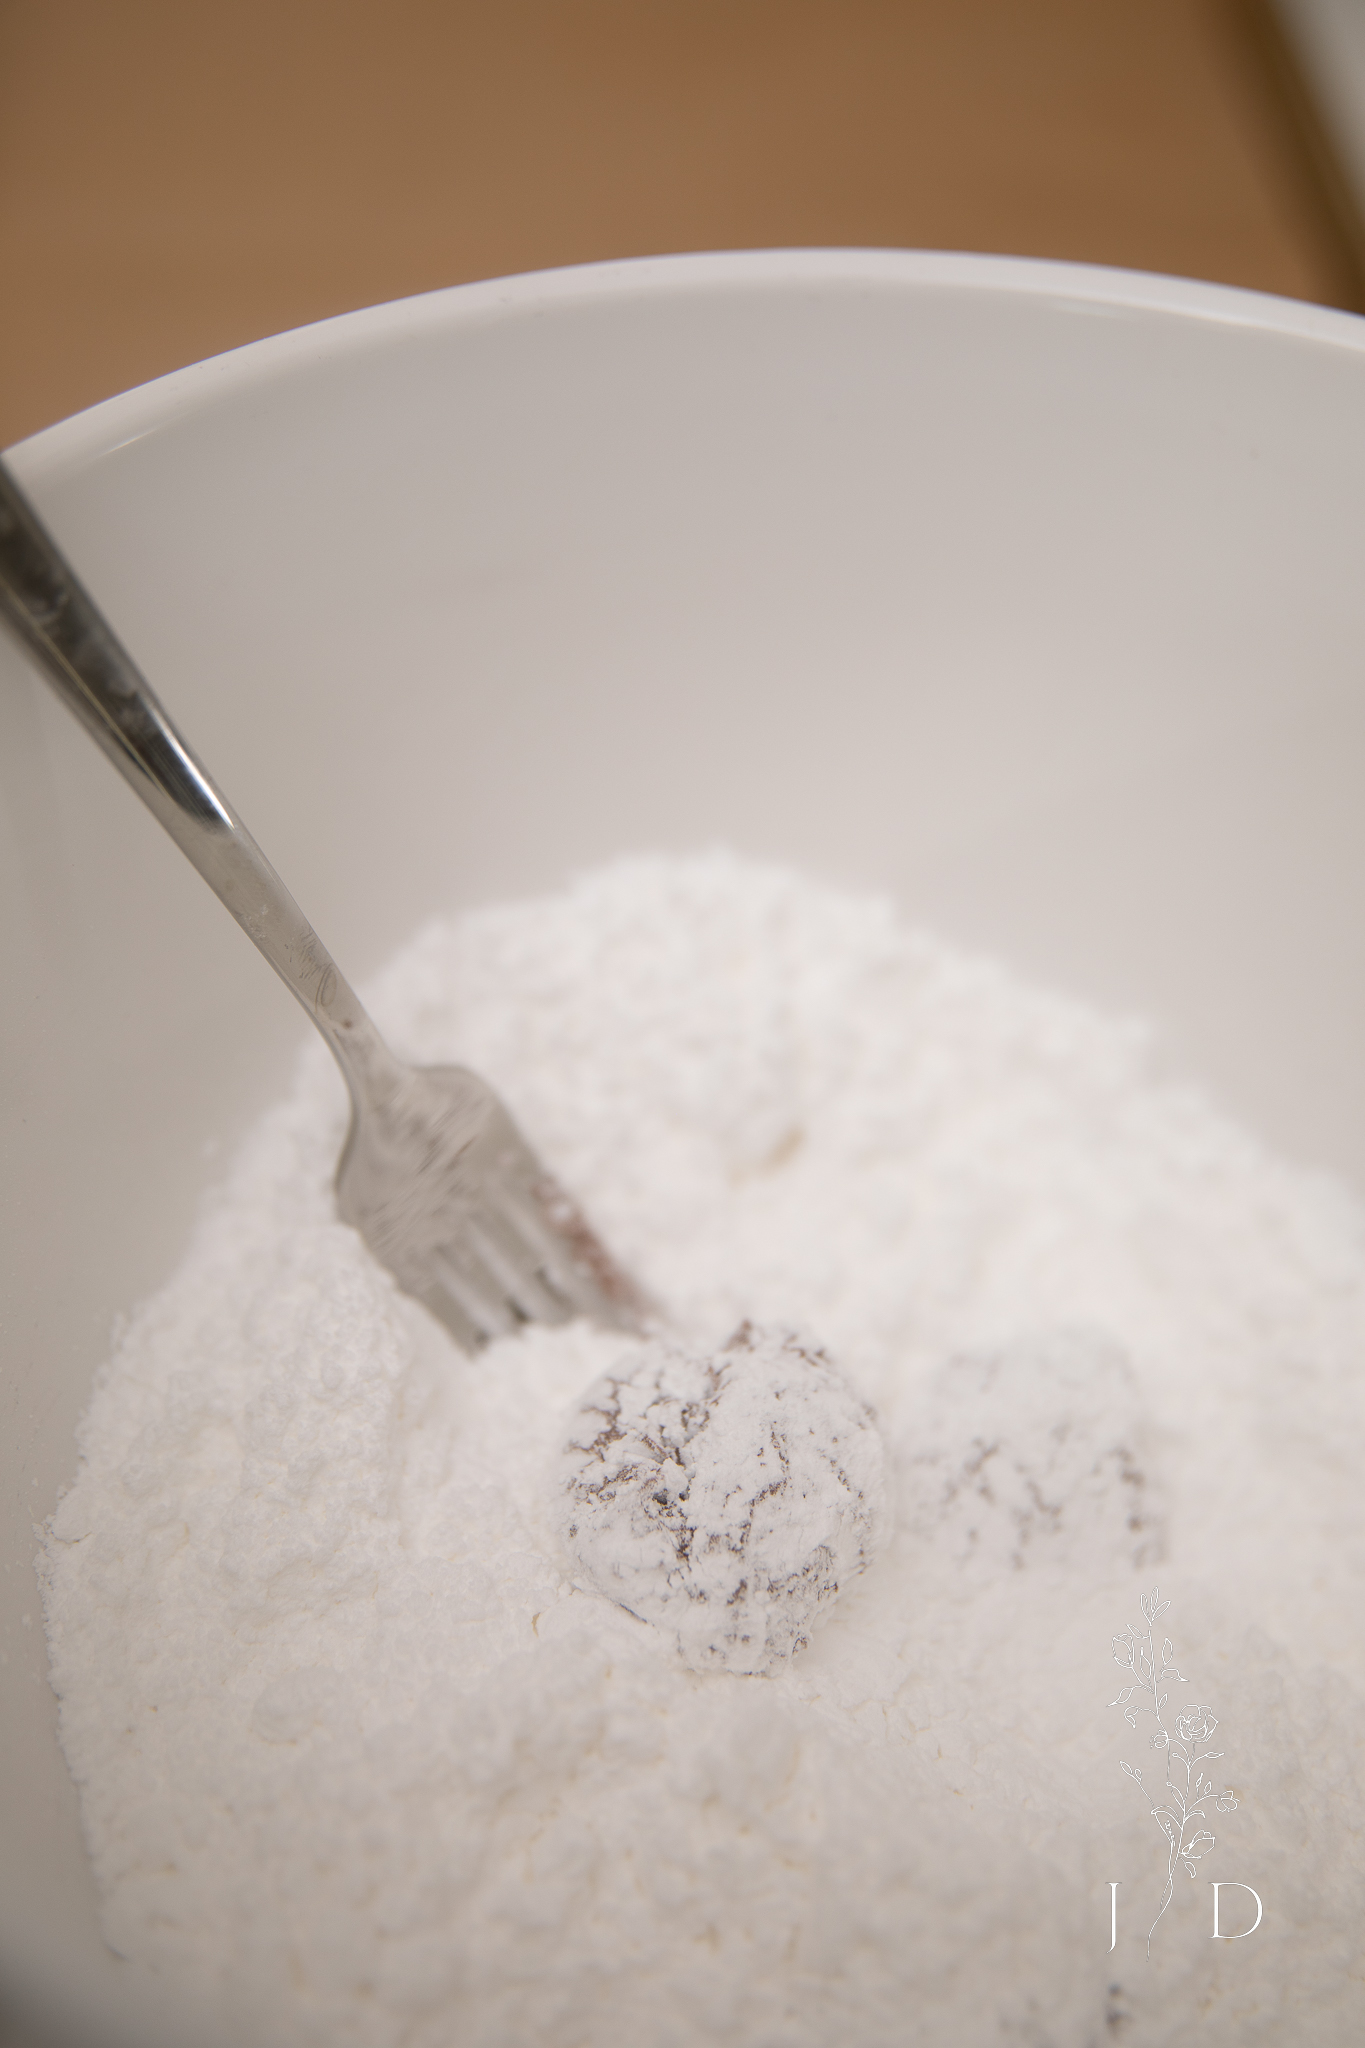 cookies dipped in powdered sugar 